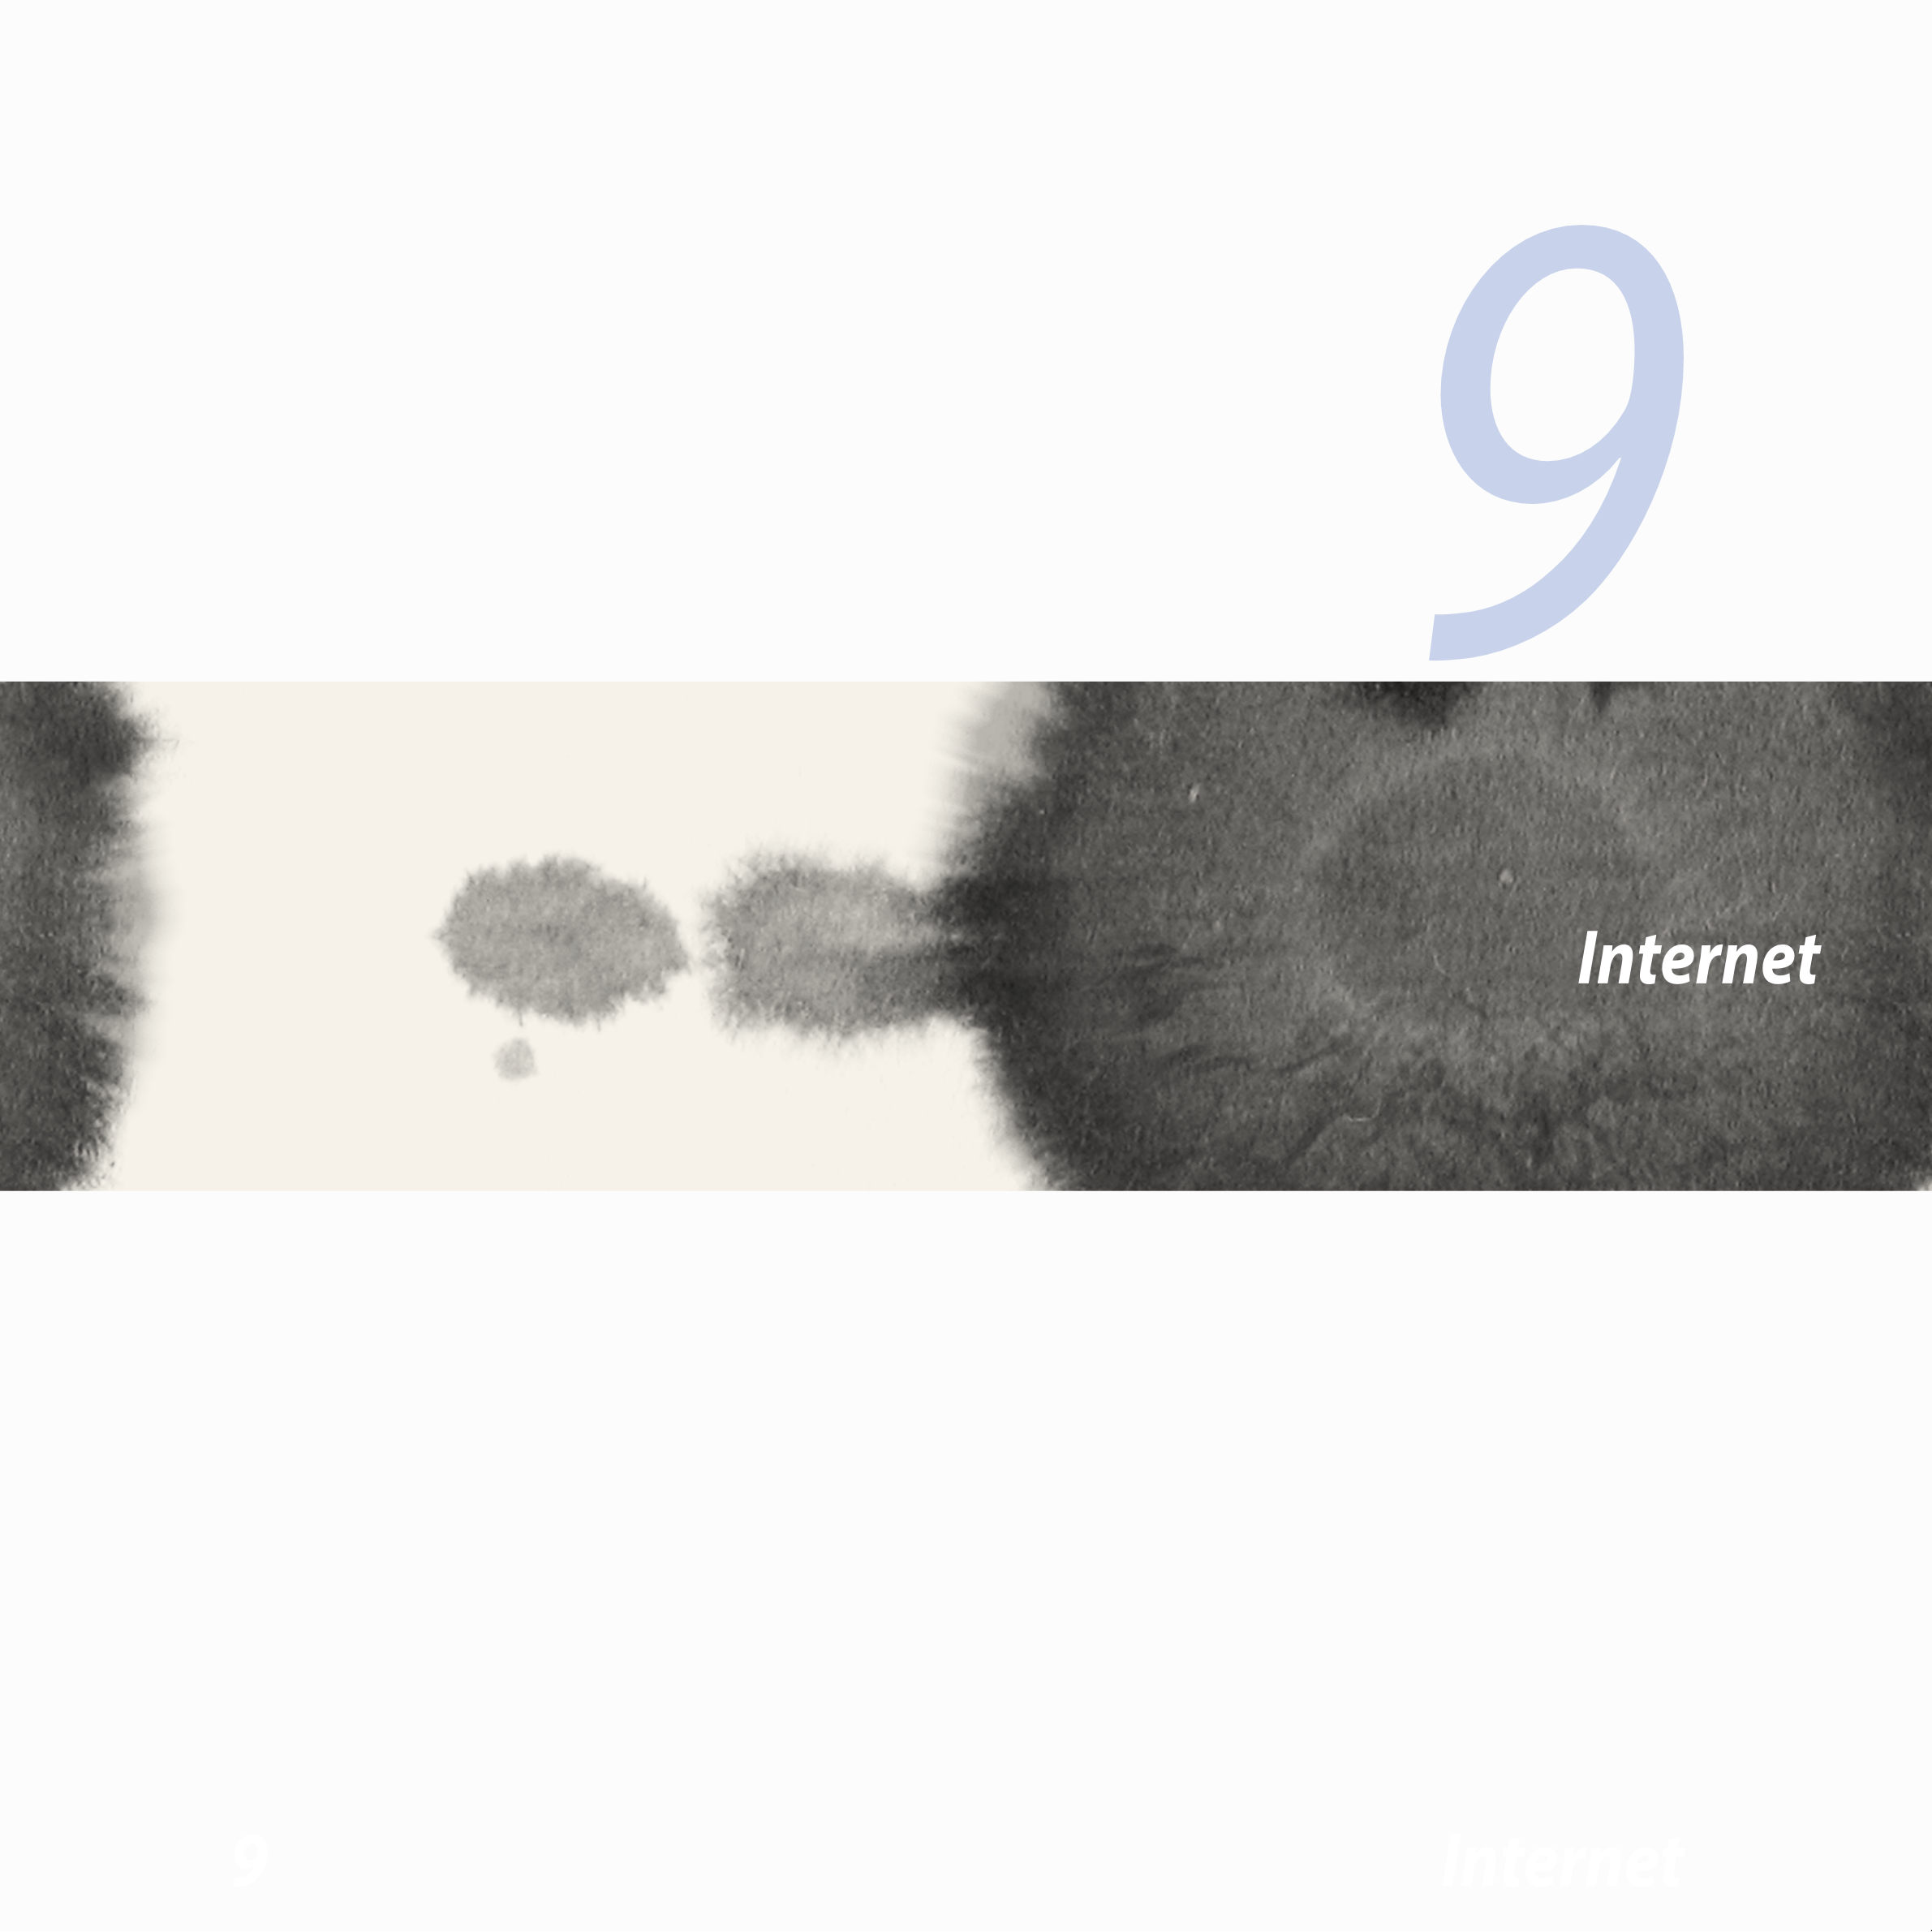 9
Internet
9  Internet